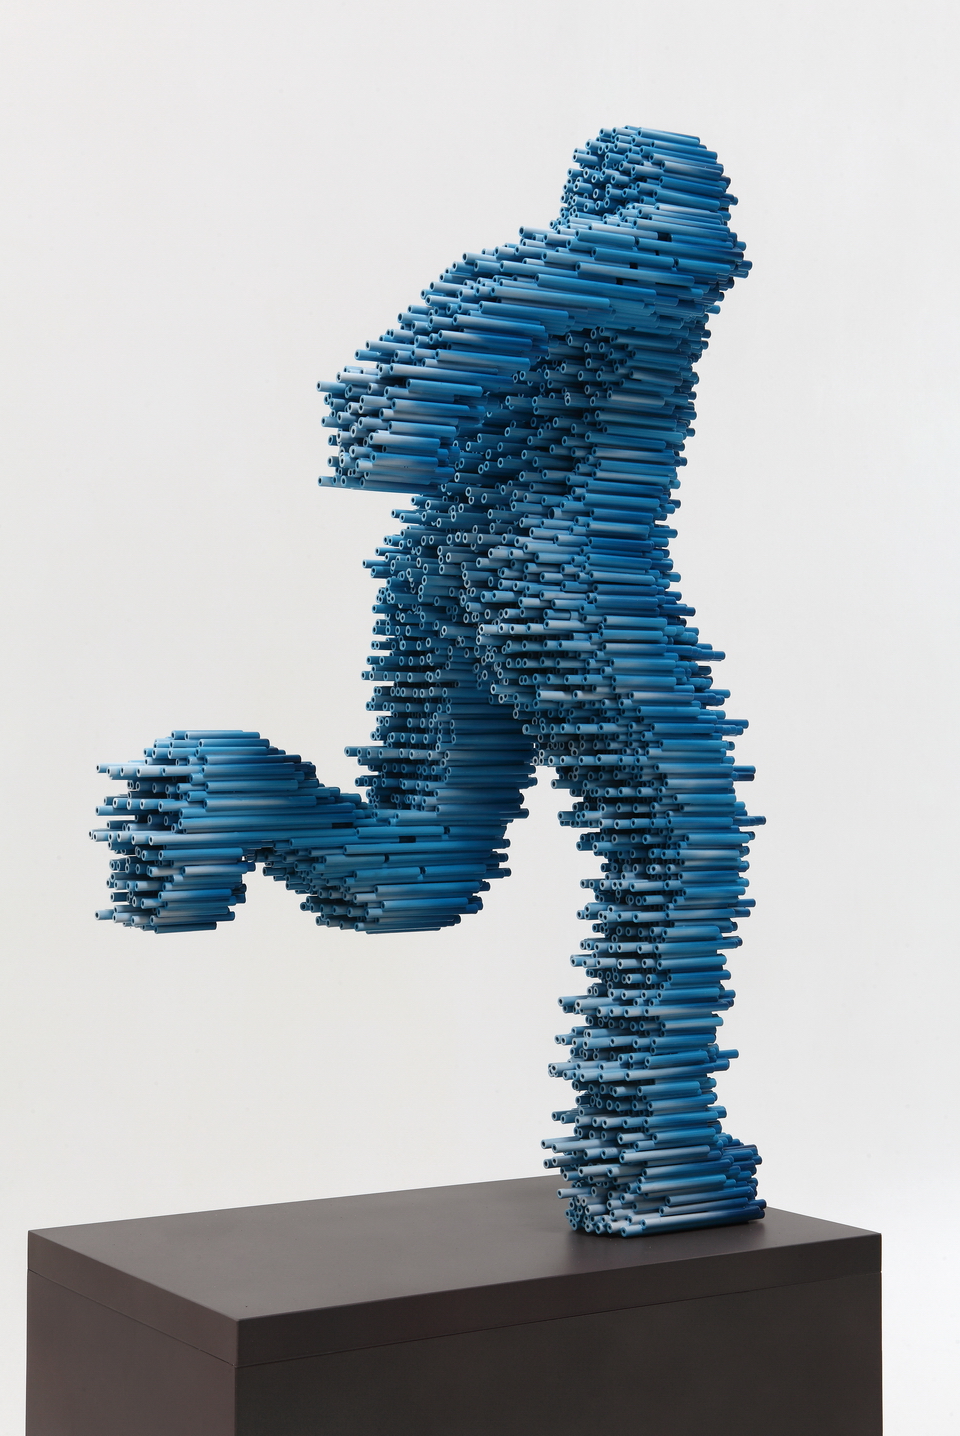 PVC Pipe Sculptures by artist Kang Duck bong